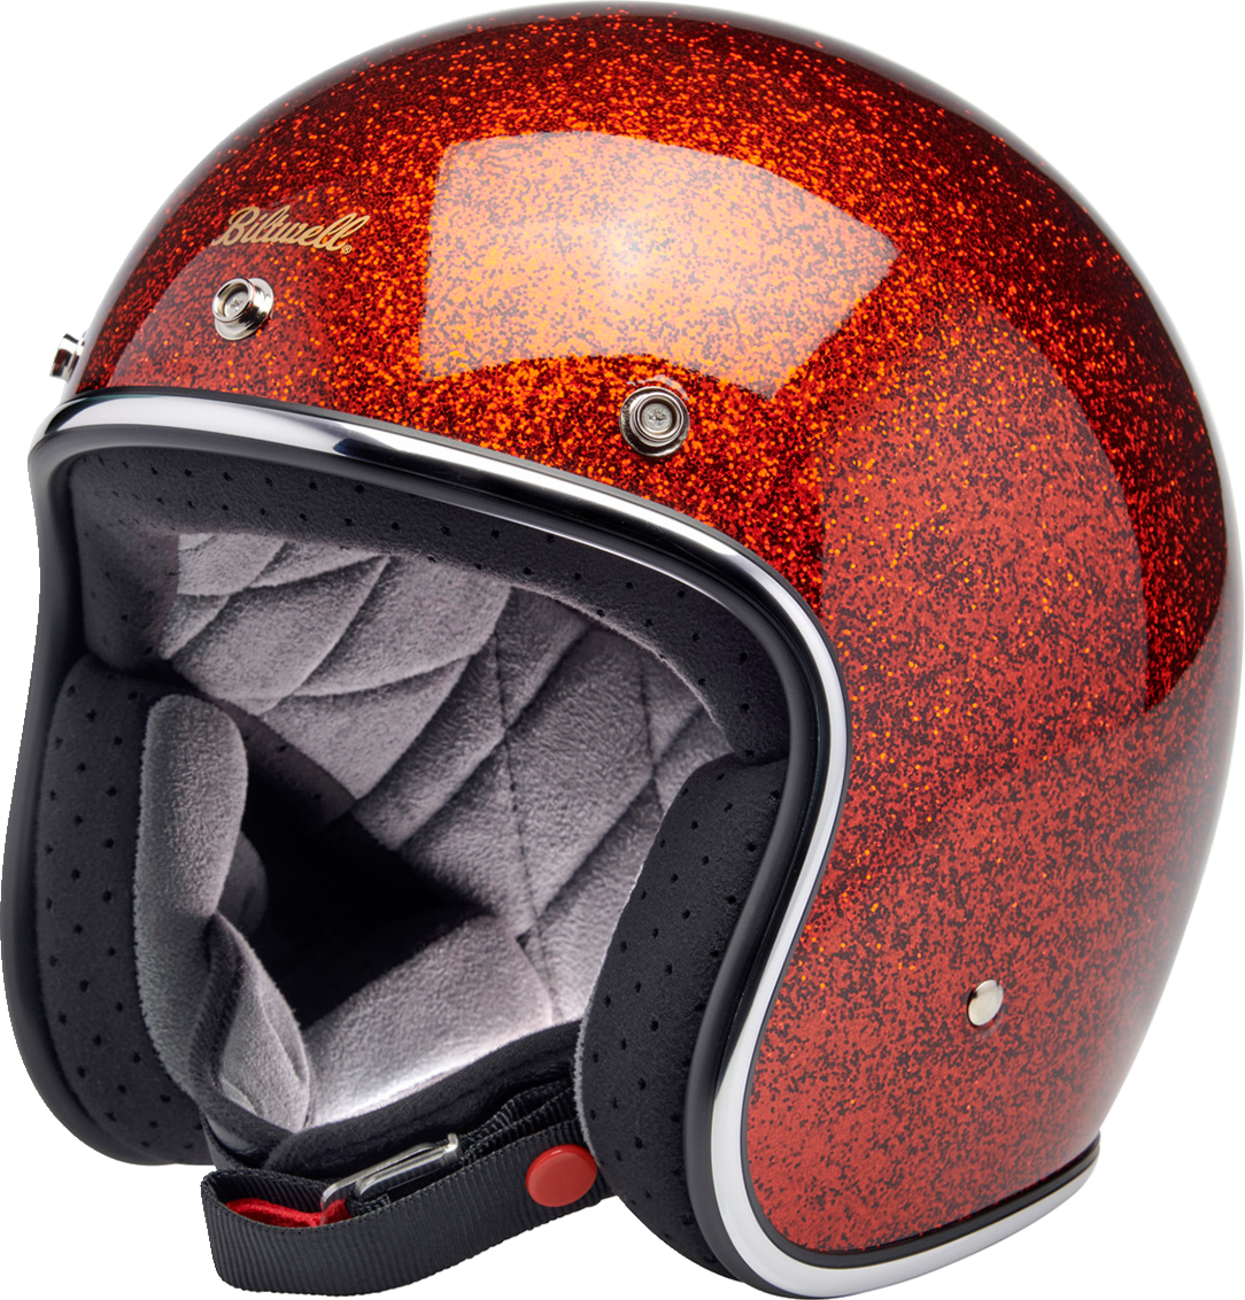 BILTWELL Bonanza Helmet - Rootbeer Megaflake - XL 1001-457-205